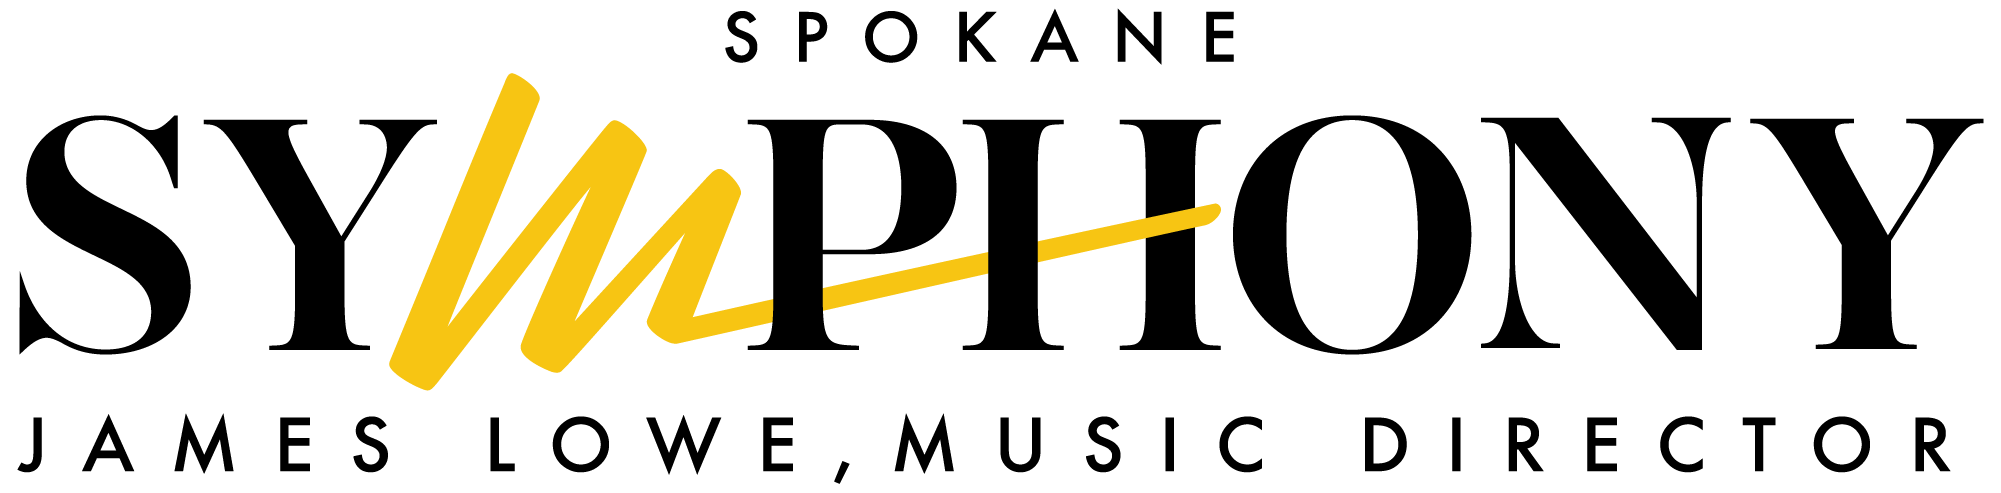 Spokane Symphony logo